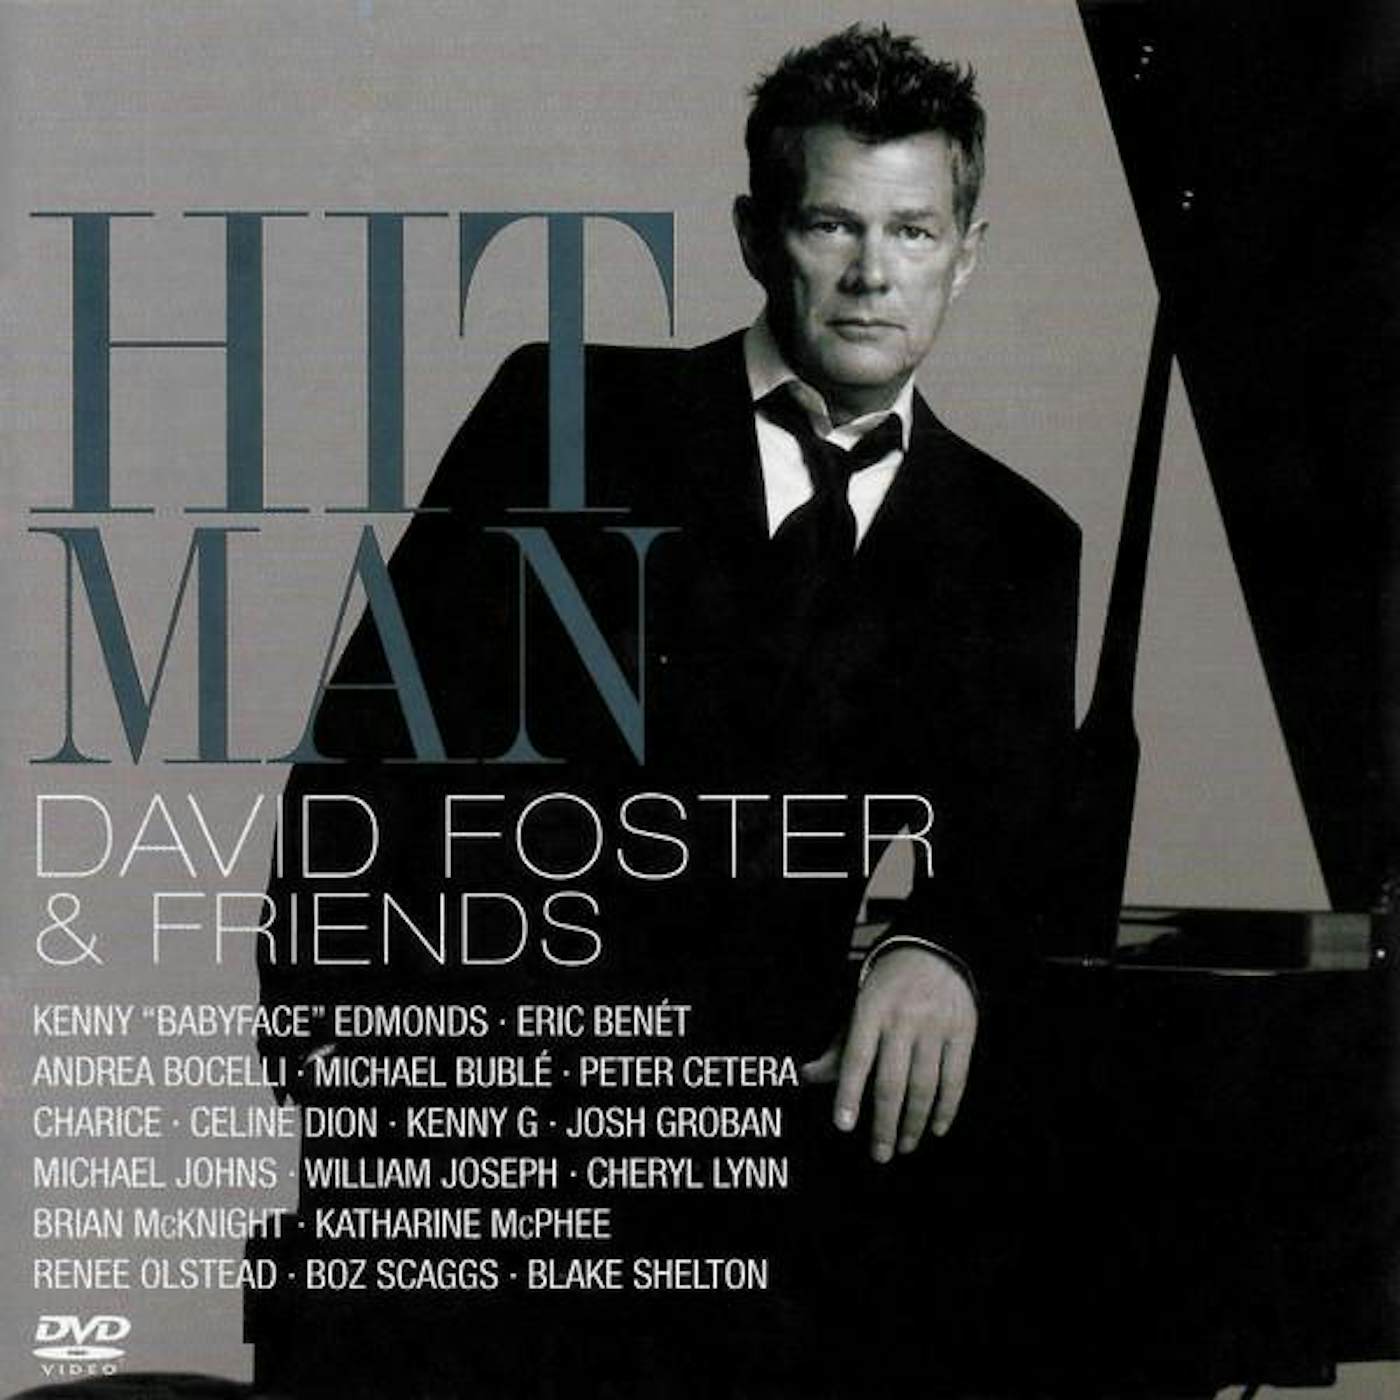 HIT MAN: DAVID FOSTER & FRIENDS CD